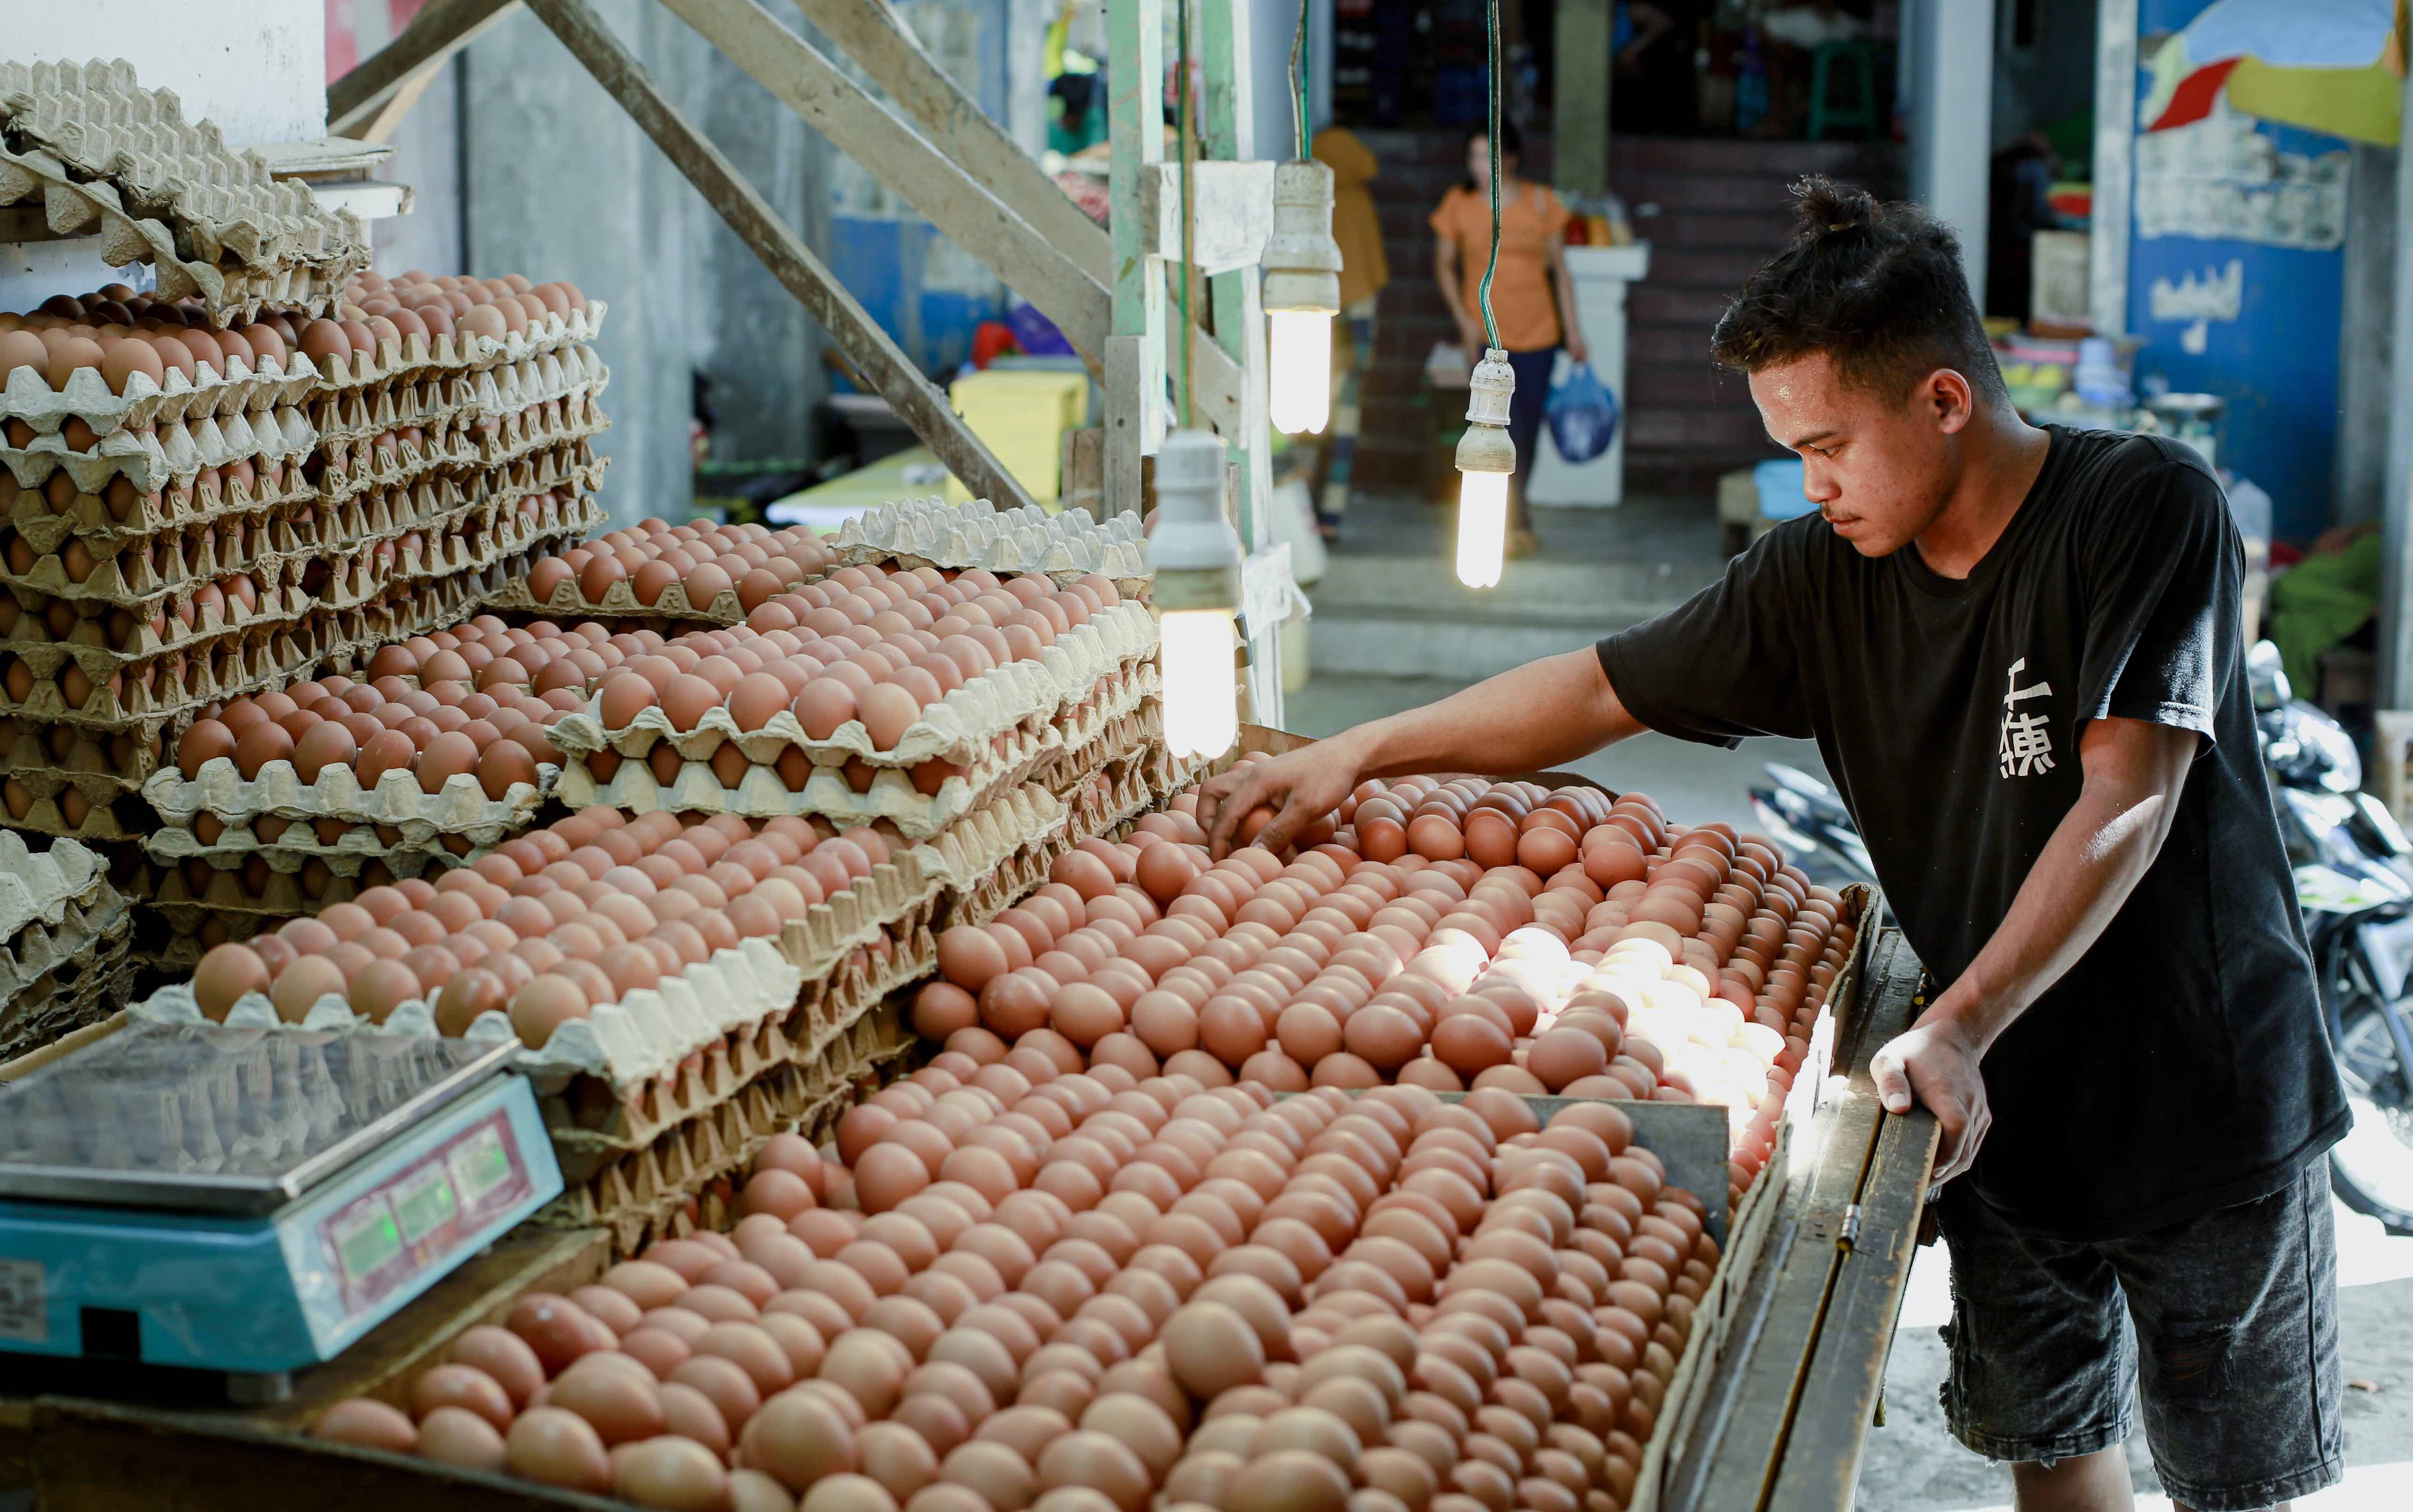 Man arranges stacks of eggs